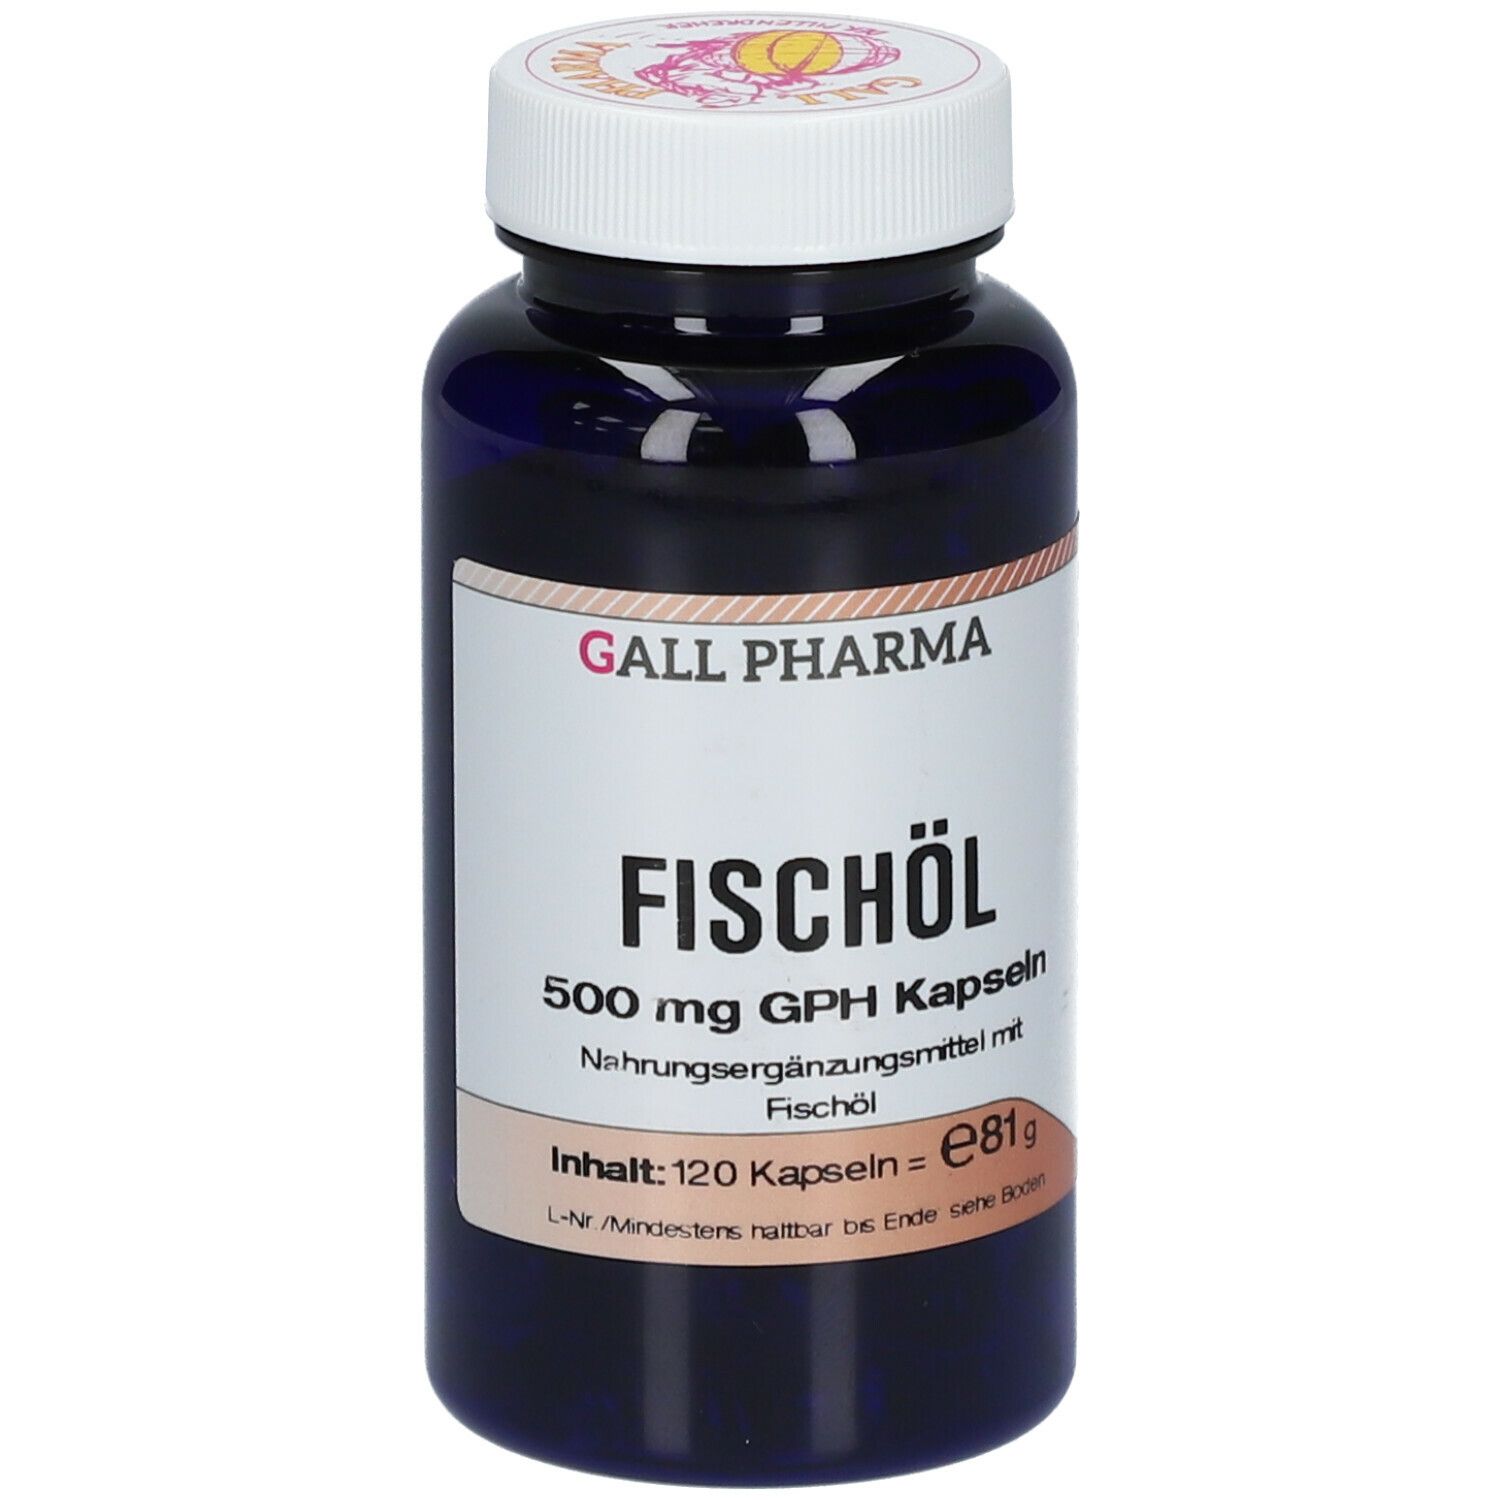 GALL PHARMA Fischöl 500 mg GPH Kapseln